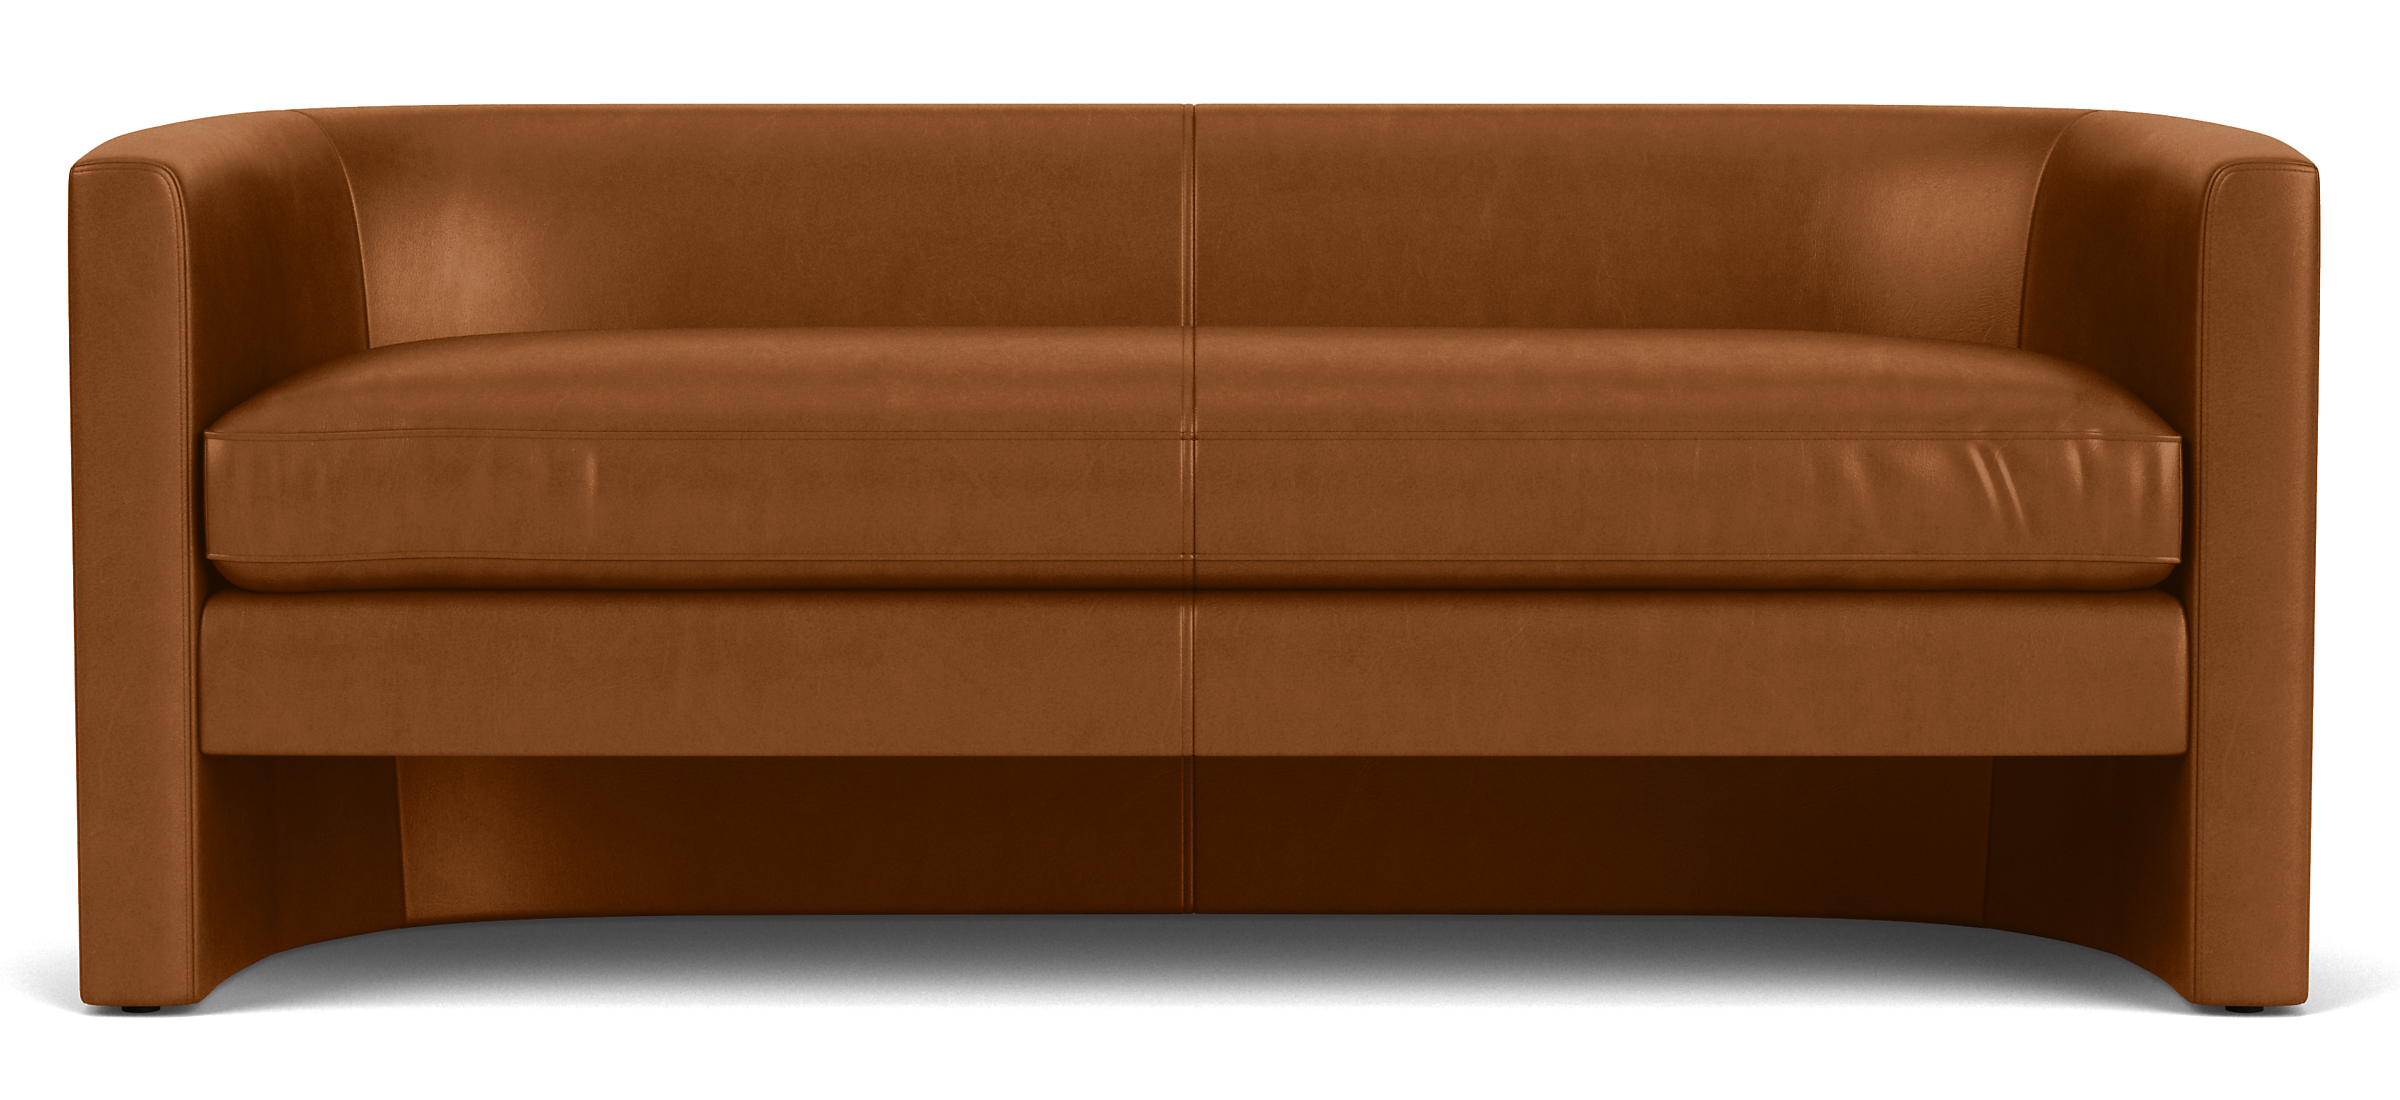 Silva Leather Bench